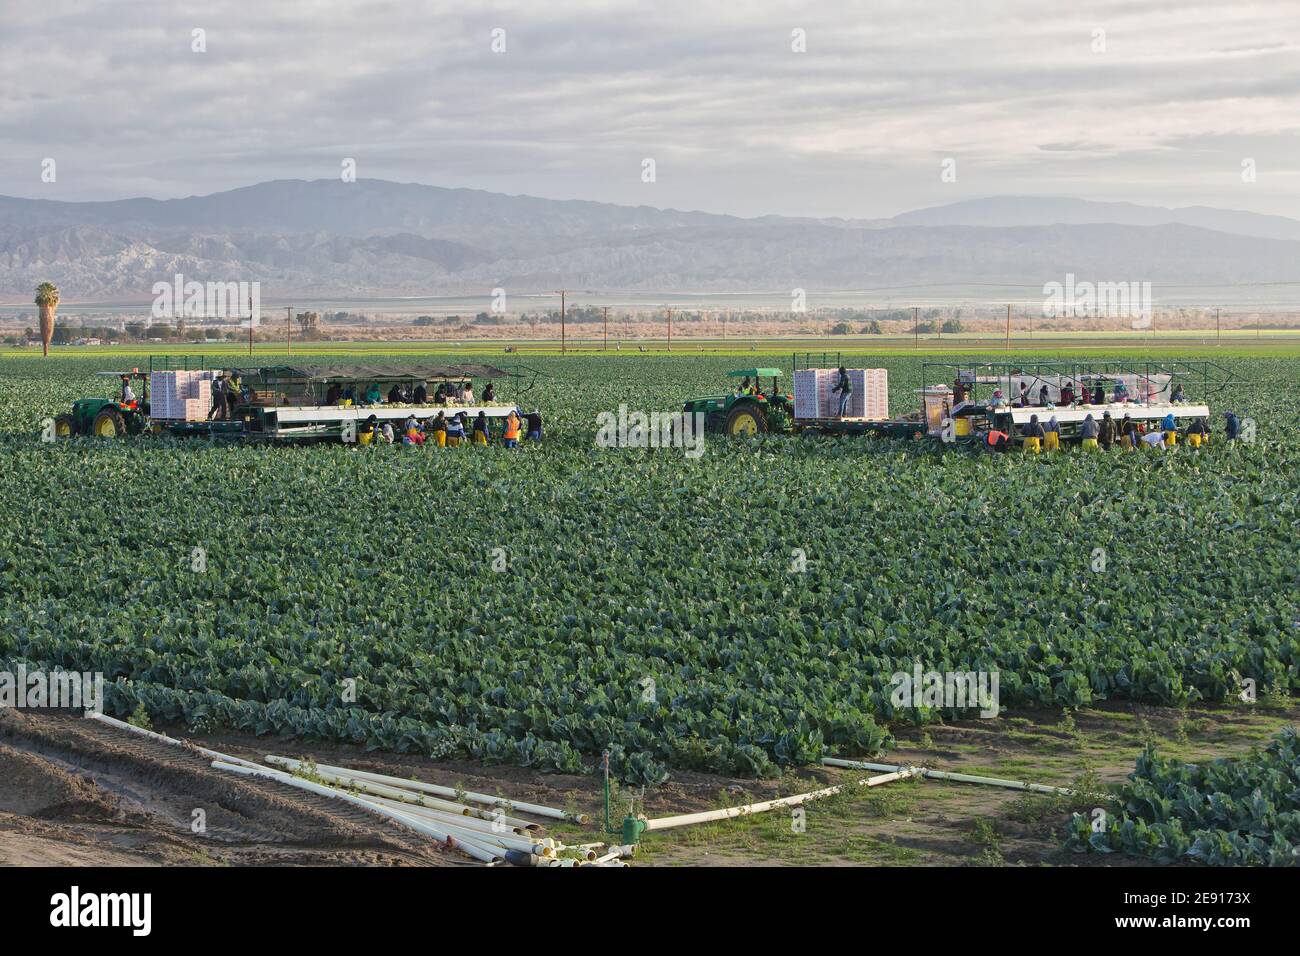 Hispanische Landarbeiter ernten - Verpacken von Bio-Blumenkohl 'Brassica oleracea var. botrytis', John Deere Traktor, Morgenlicht, Kalifornien. Stockfoto